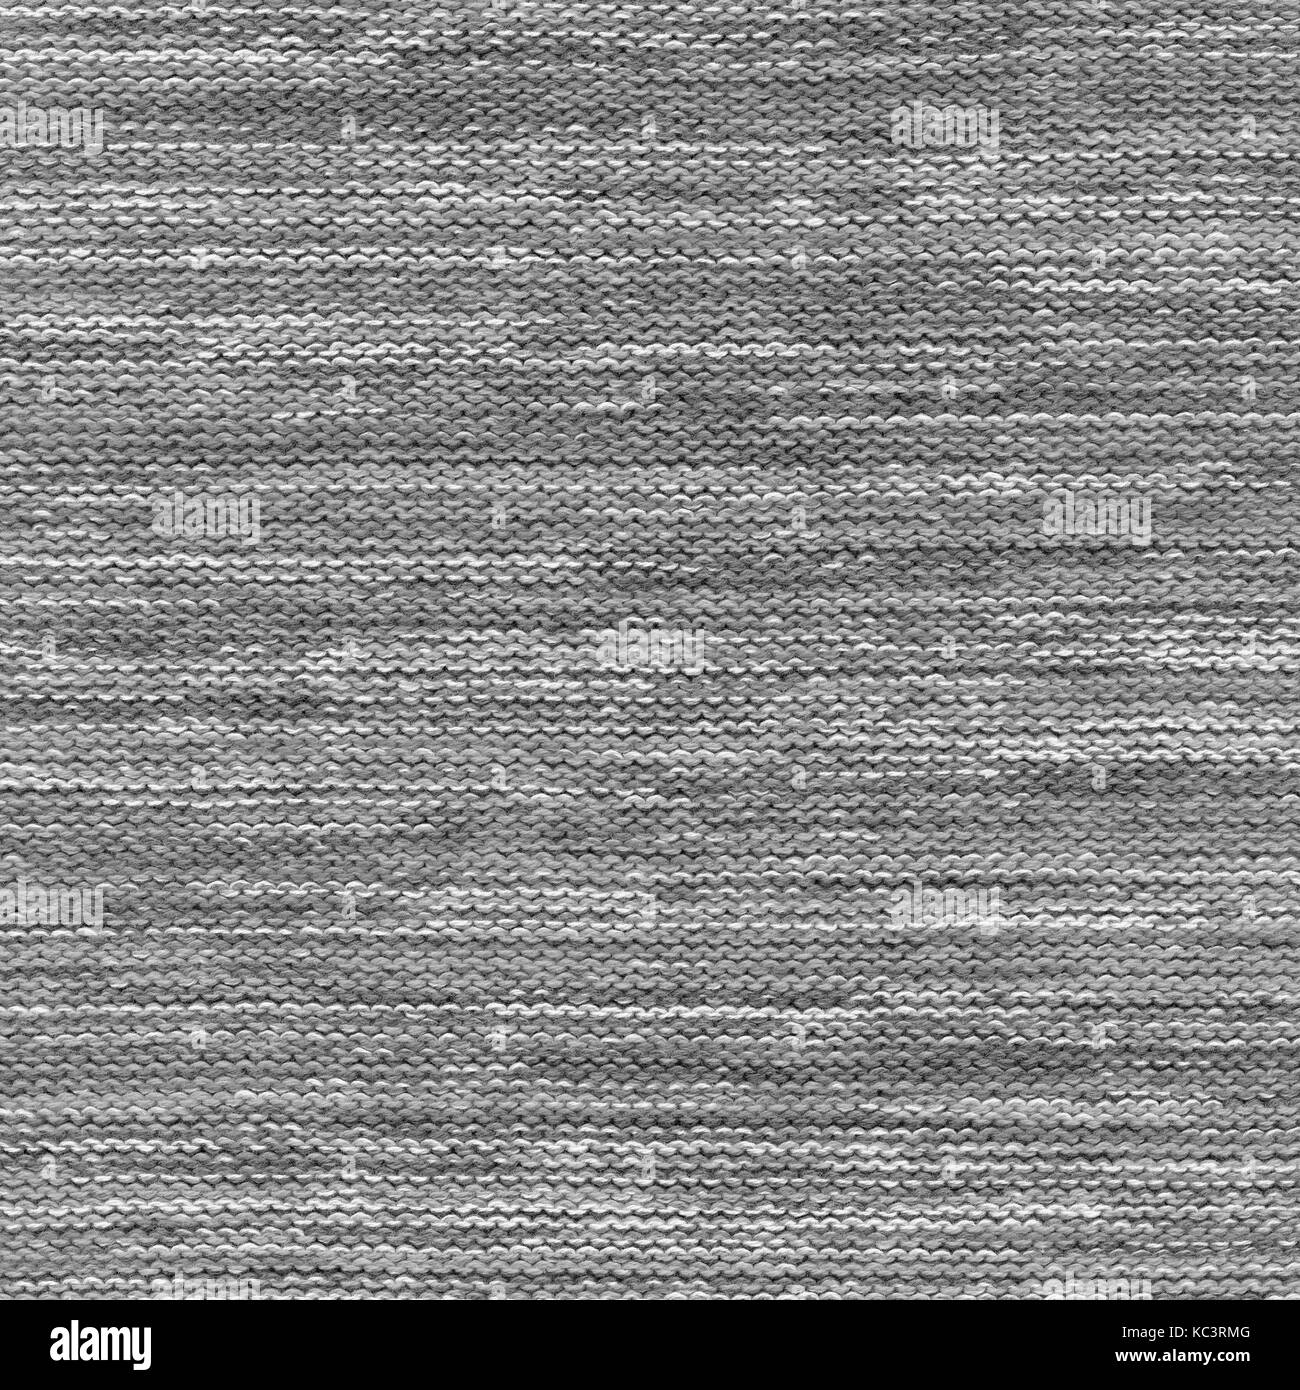 Dark gray woven fabric texture Stock Photo